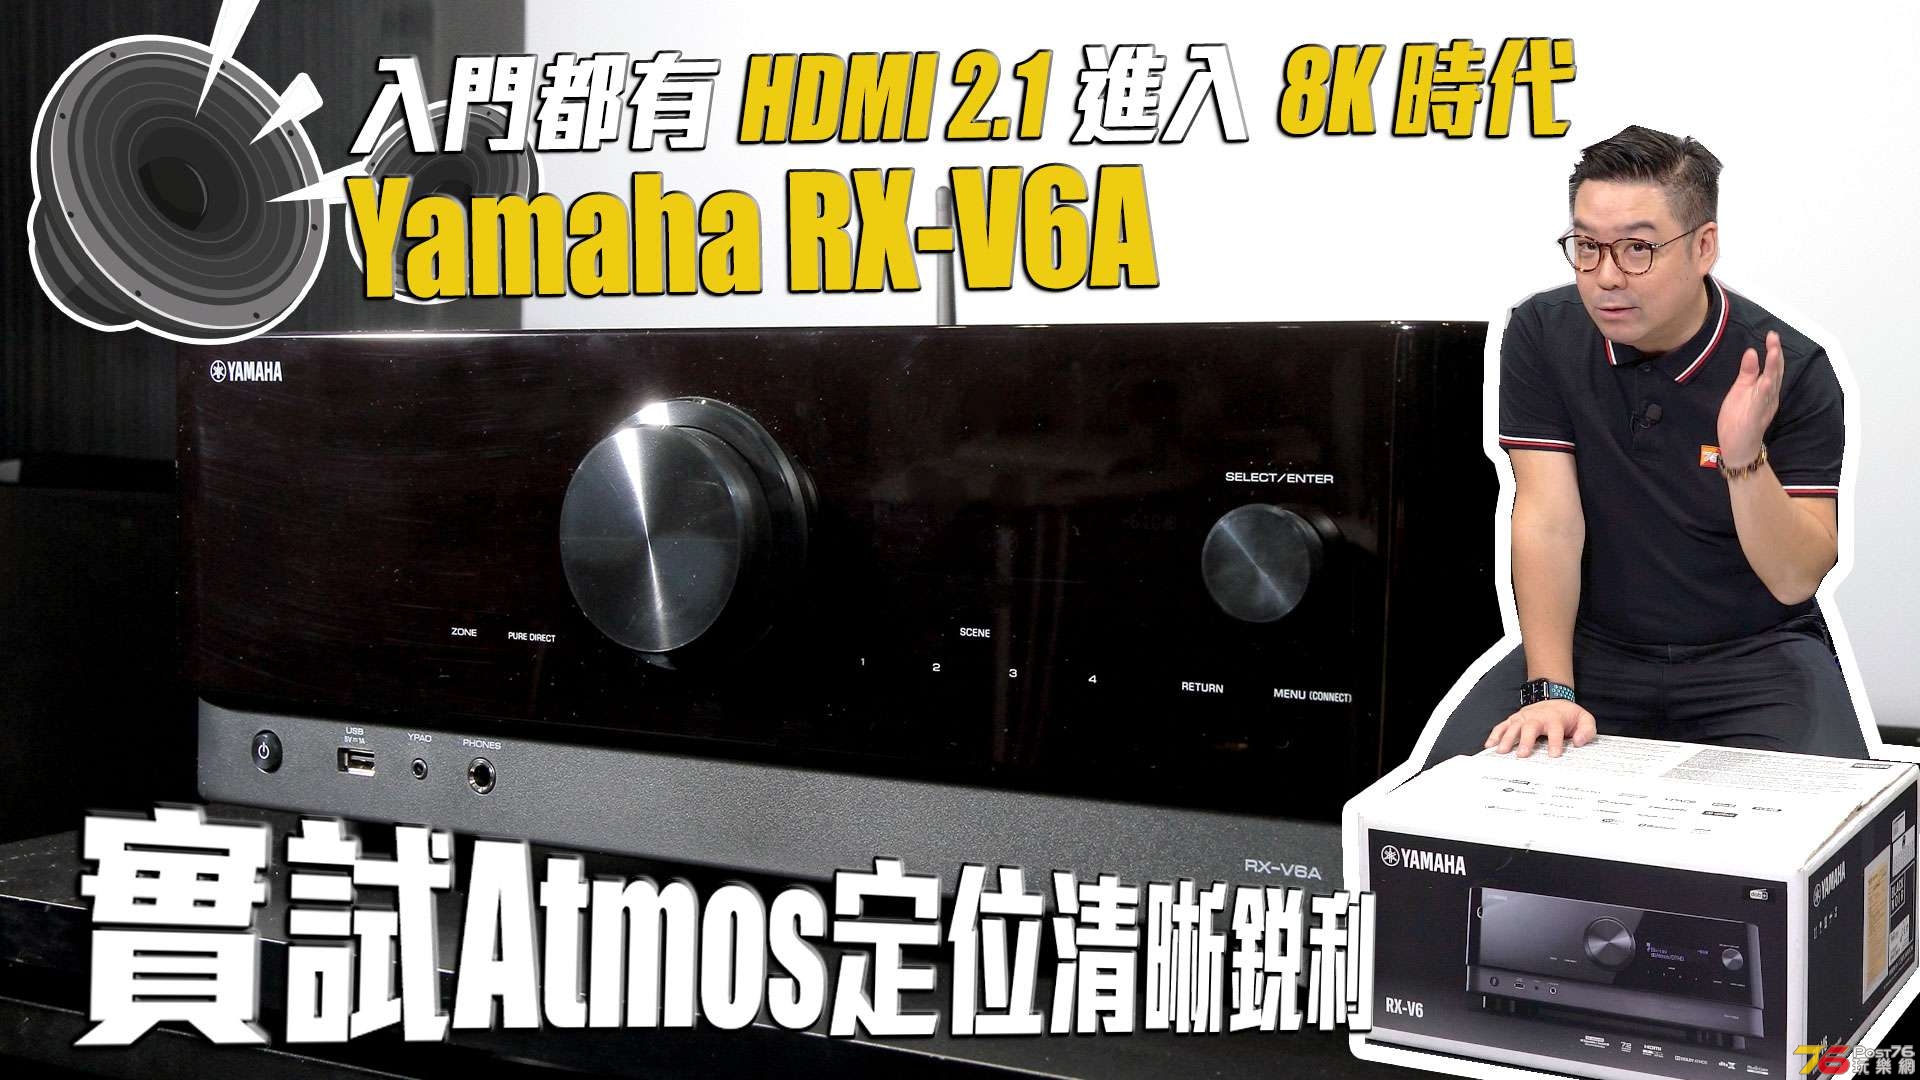 Yamaha RX-V6A 家庭影院擴音機 : 入門都有 HDMI 2.1 進化 8K 時代...